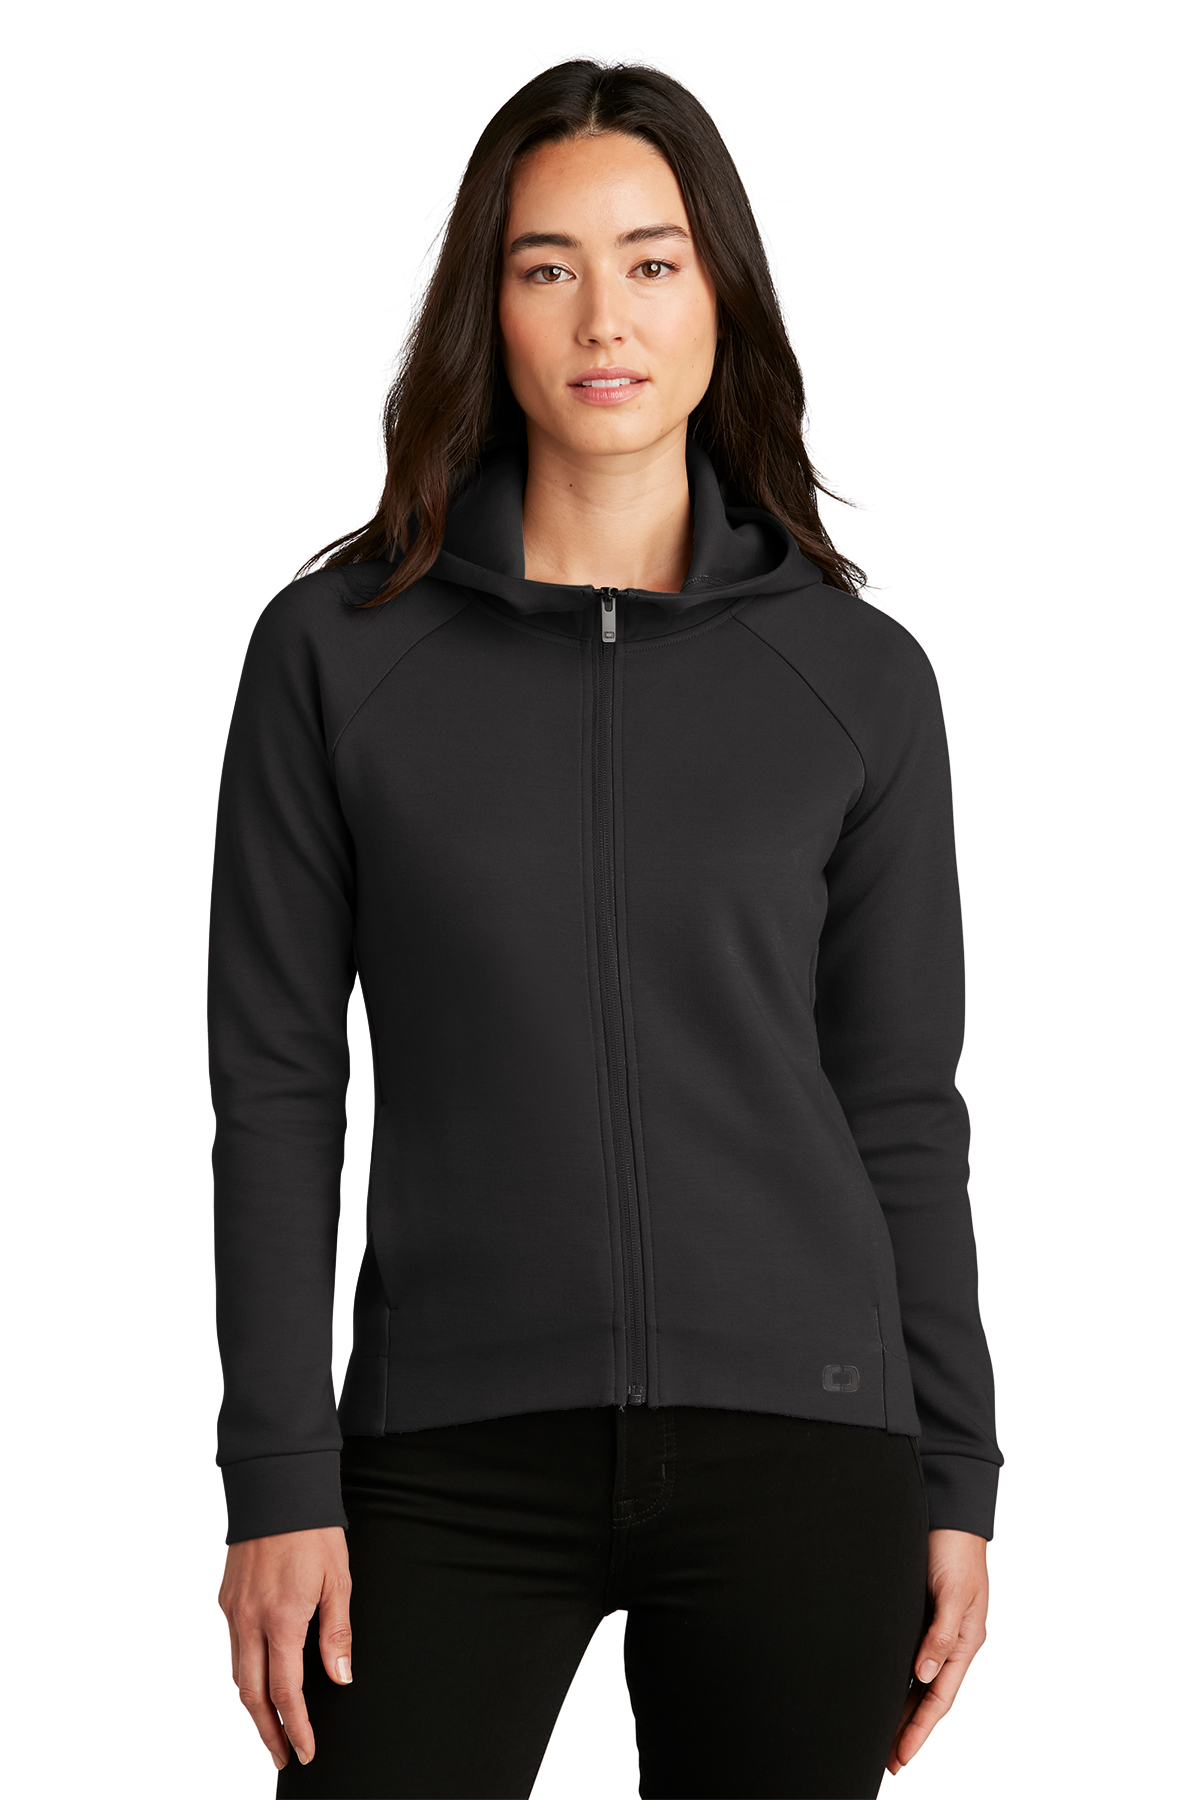 EEVEE Women’s Full Zip Hoodie Slim Fit Thin Lightweight Jacket Long Sleeve Sweater Active Yoga Running Hooded Sweatshirt 